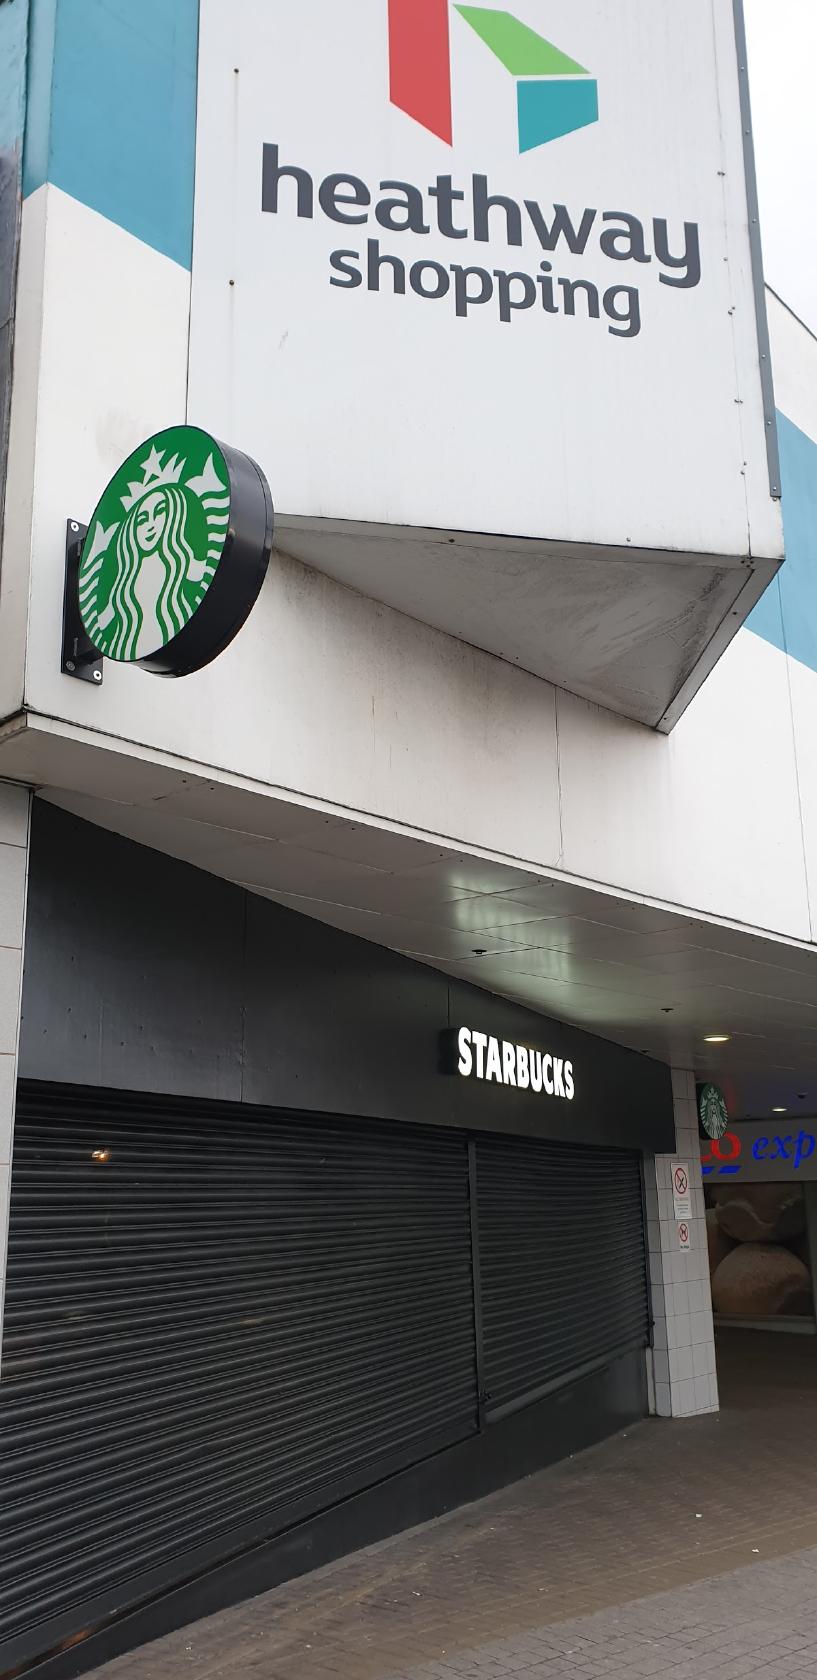 Starbucks Heathway Shopping Centre In London Restaurant Reviews